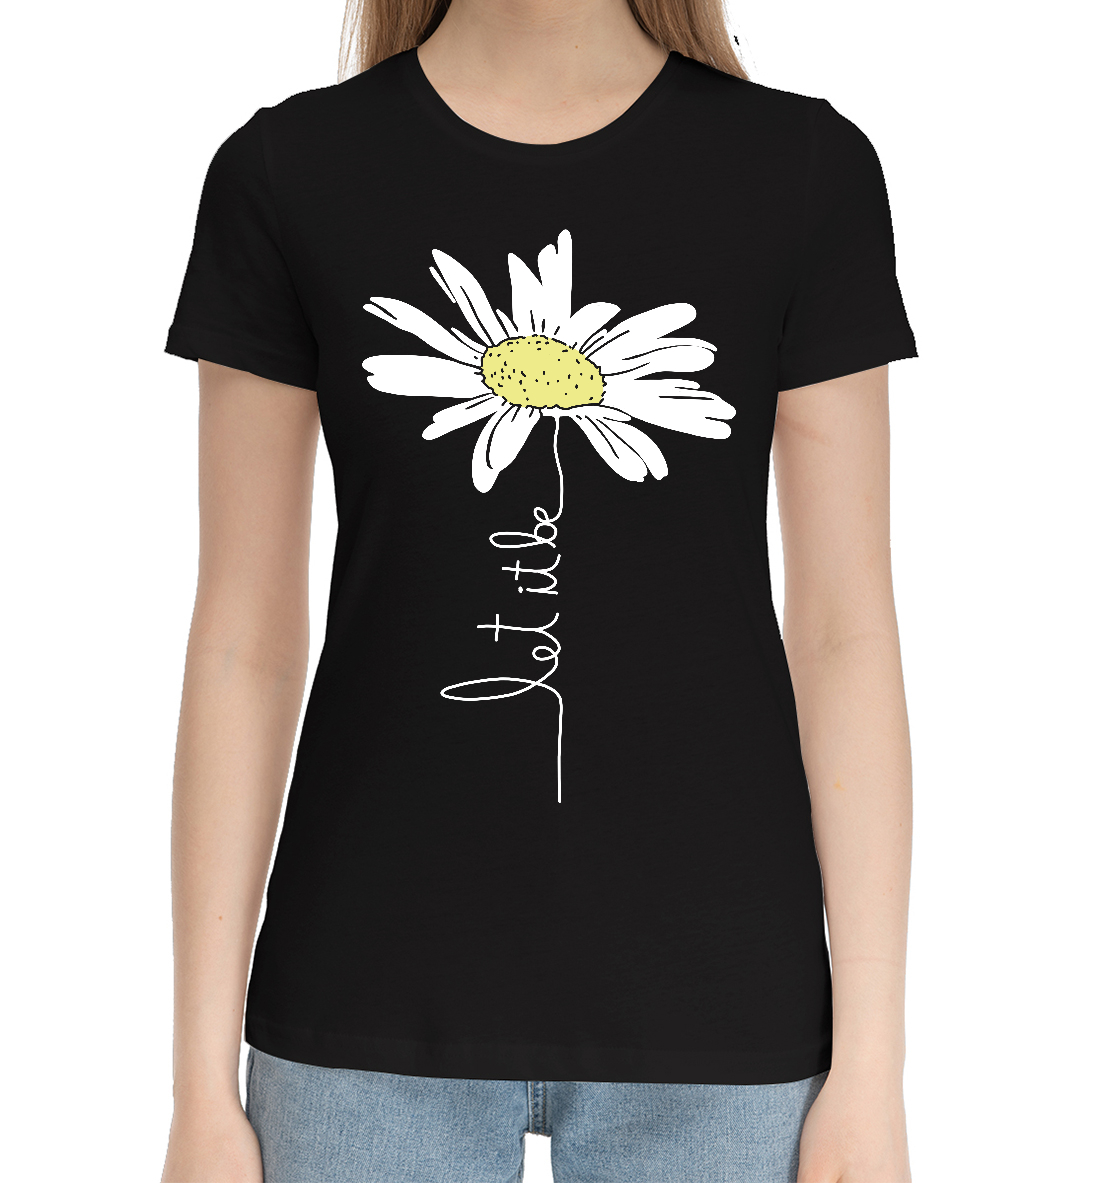 Женская Хлопковая футболка с надписью Let it be, артикул RMS-531593-hfu-1mp